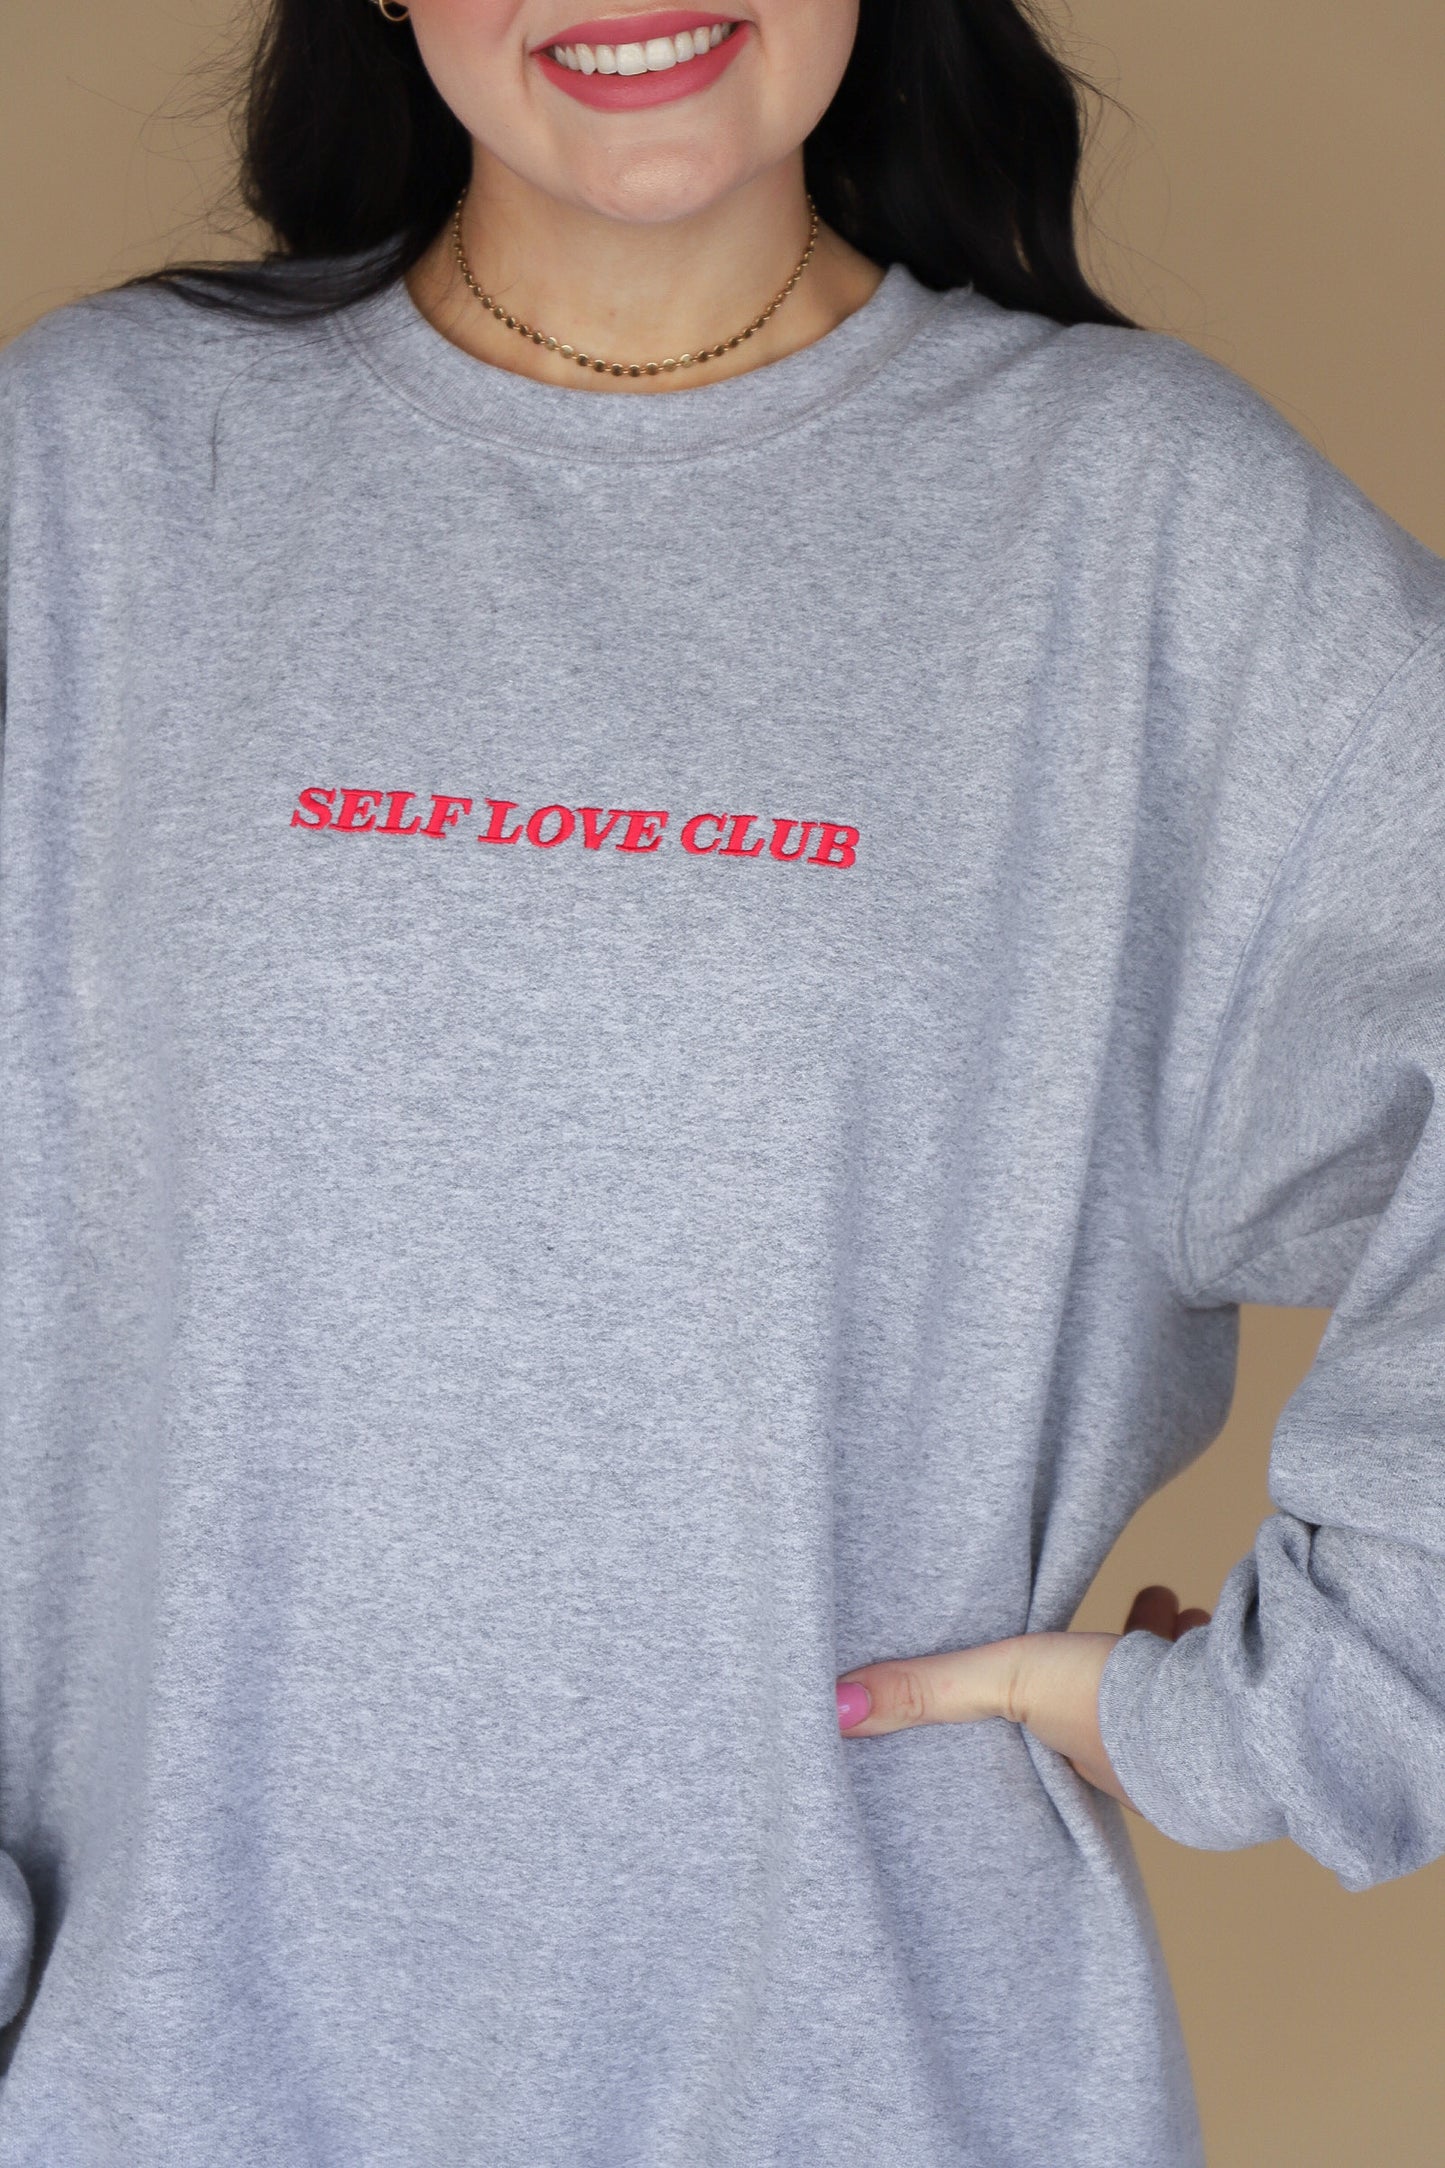 Self Love Club Sweatshirt - SJ Original Design